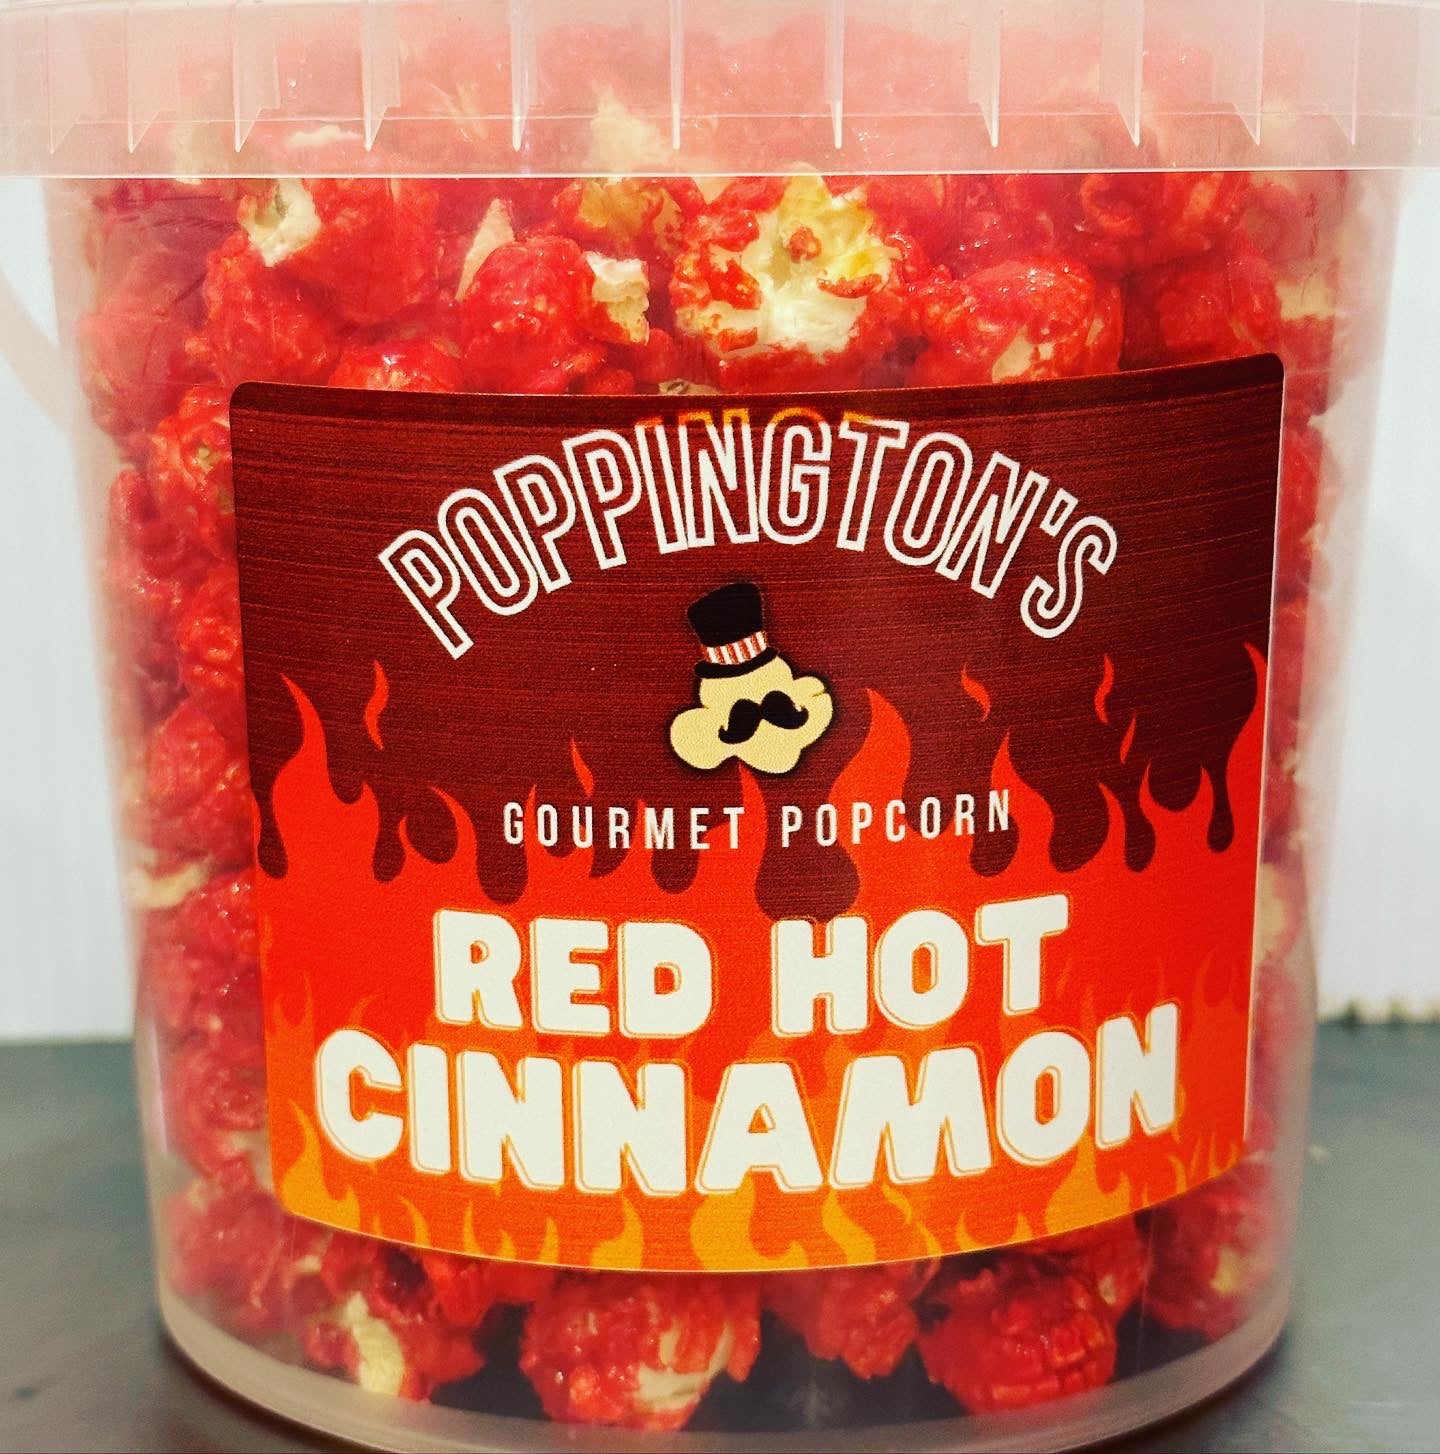 Red Hot Cinnamon